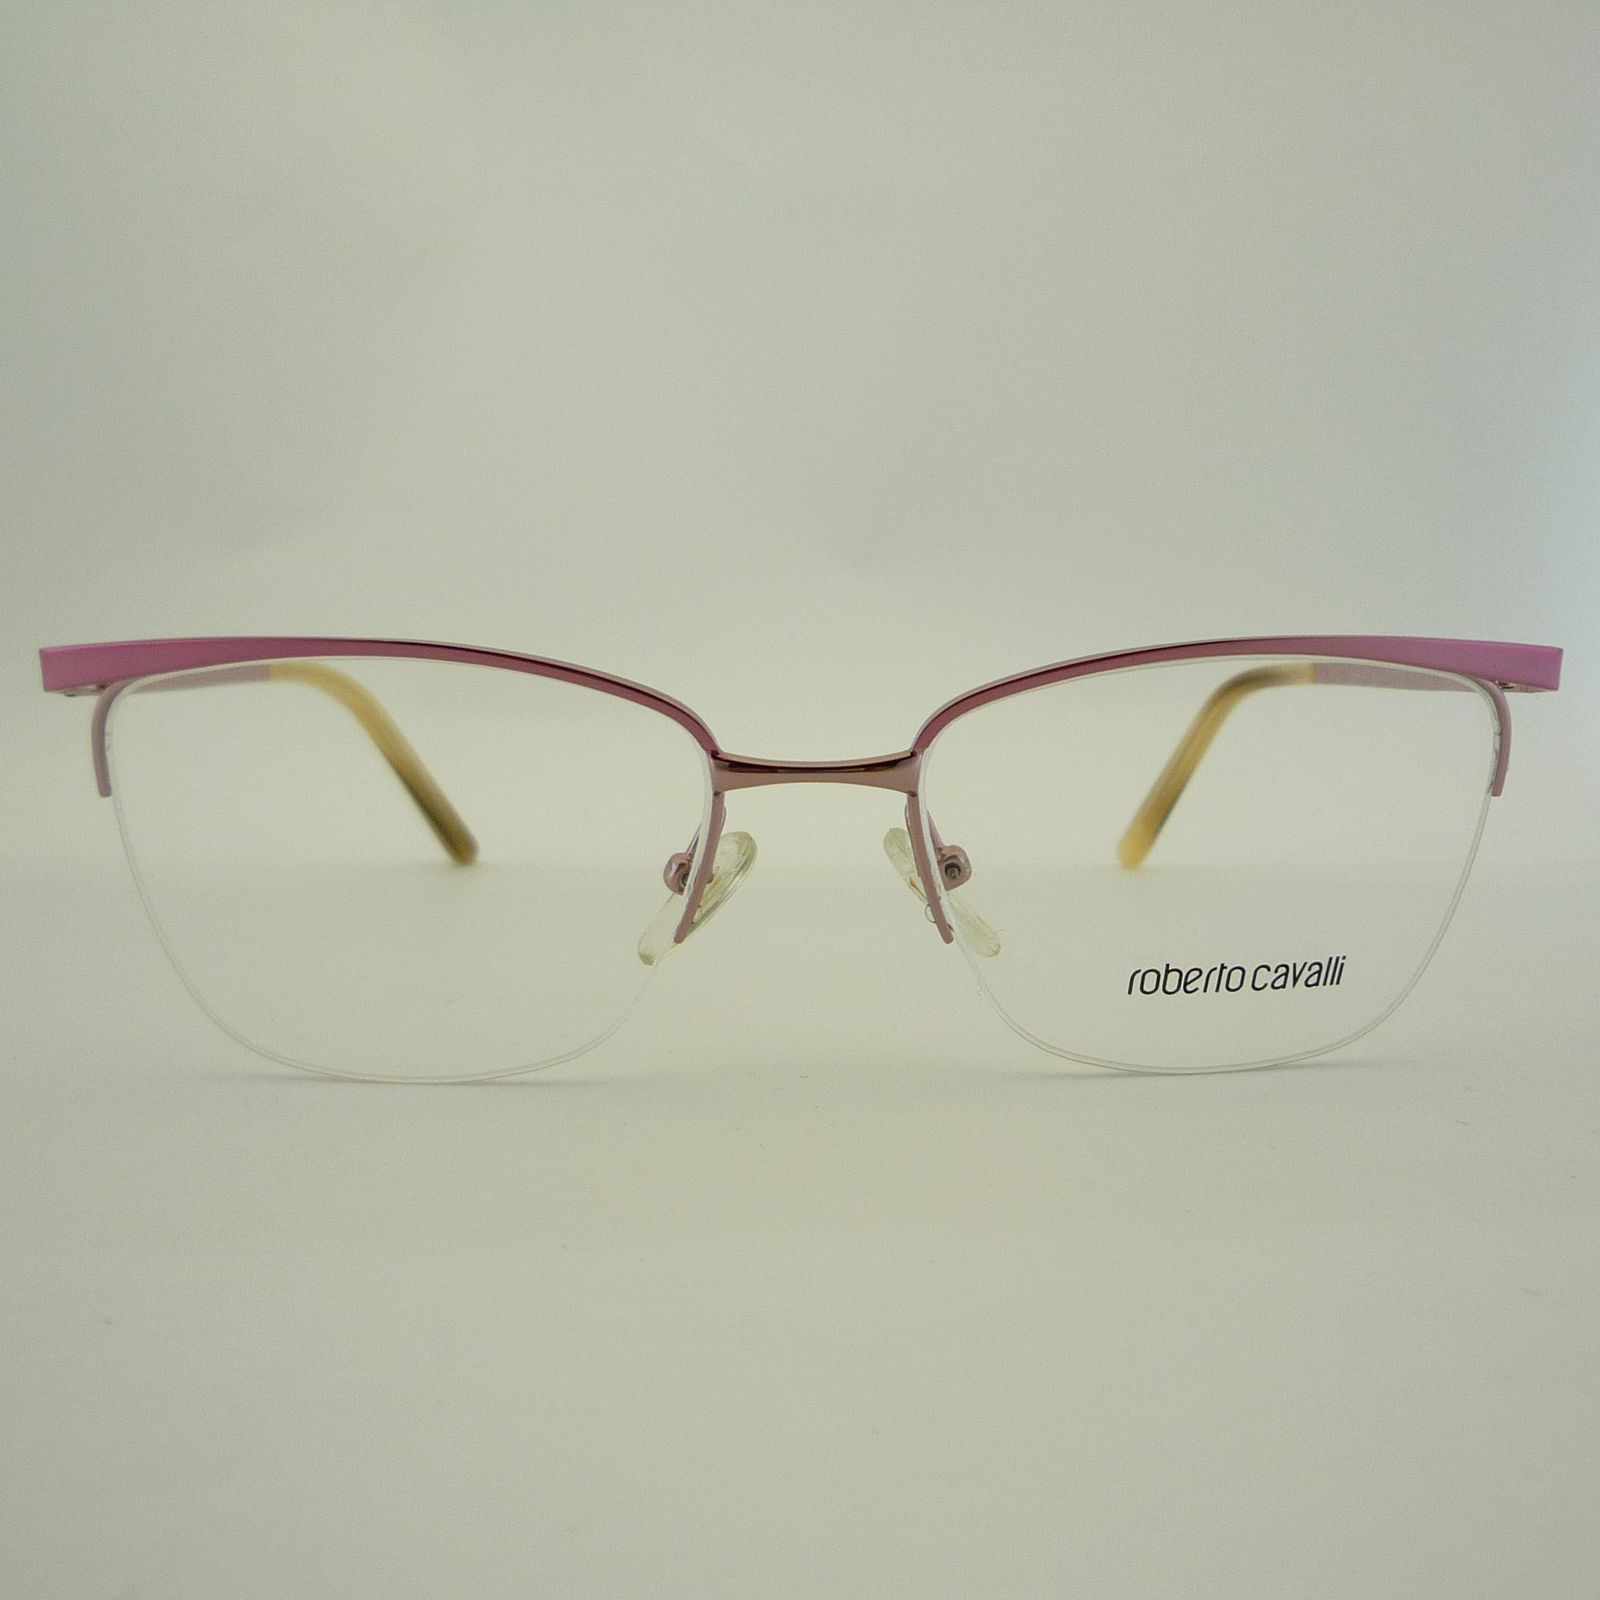 فریم عینک طبی زنانه روبرتو کاوالی مدل 6581c6 -  - 2